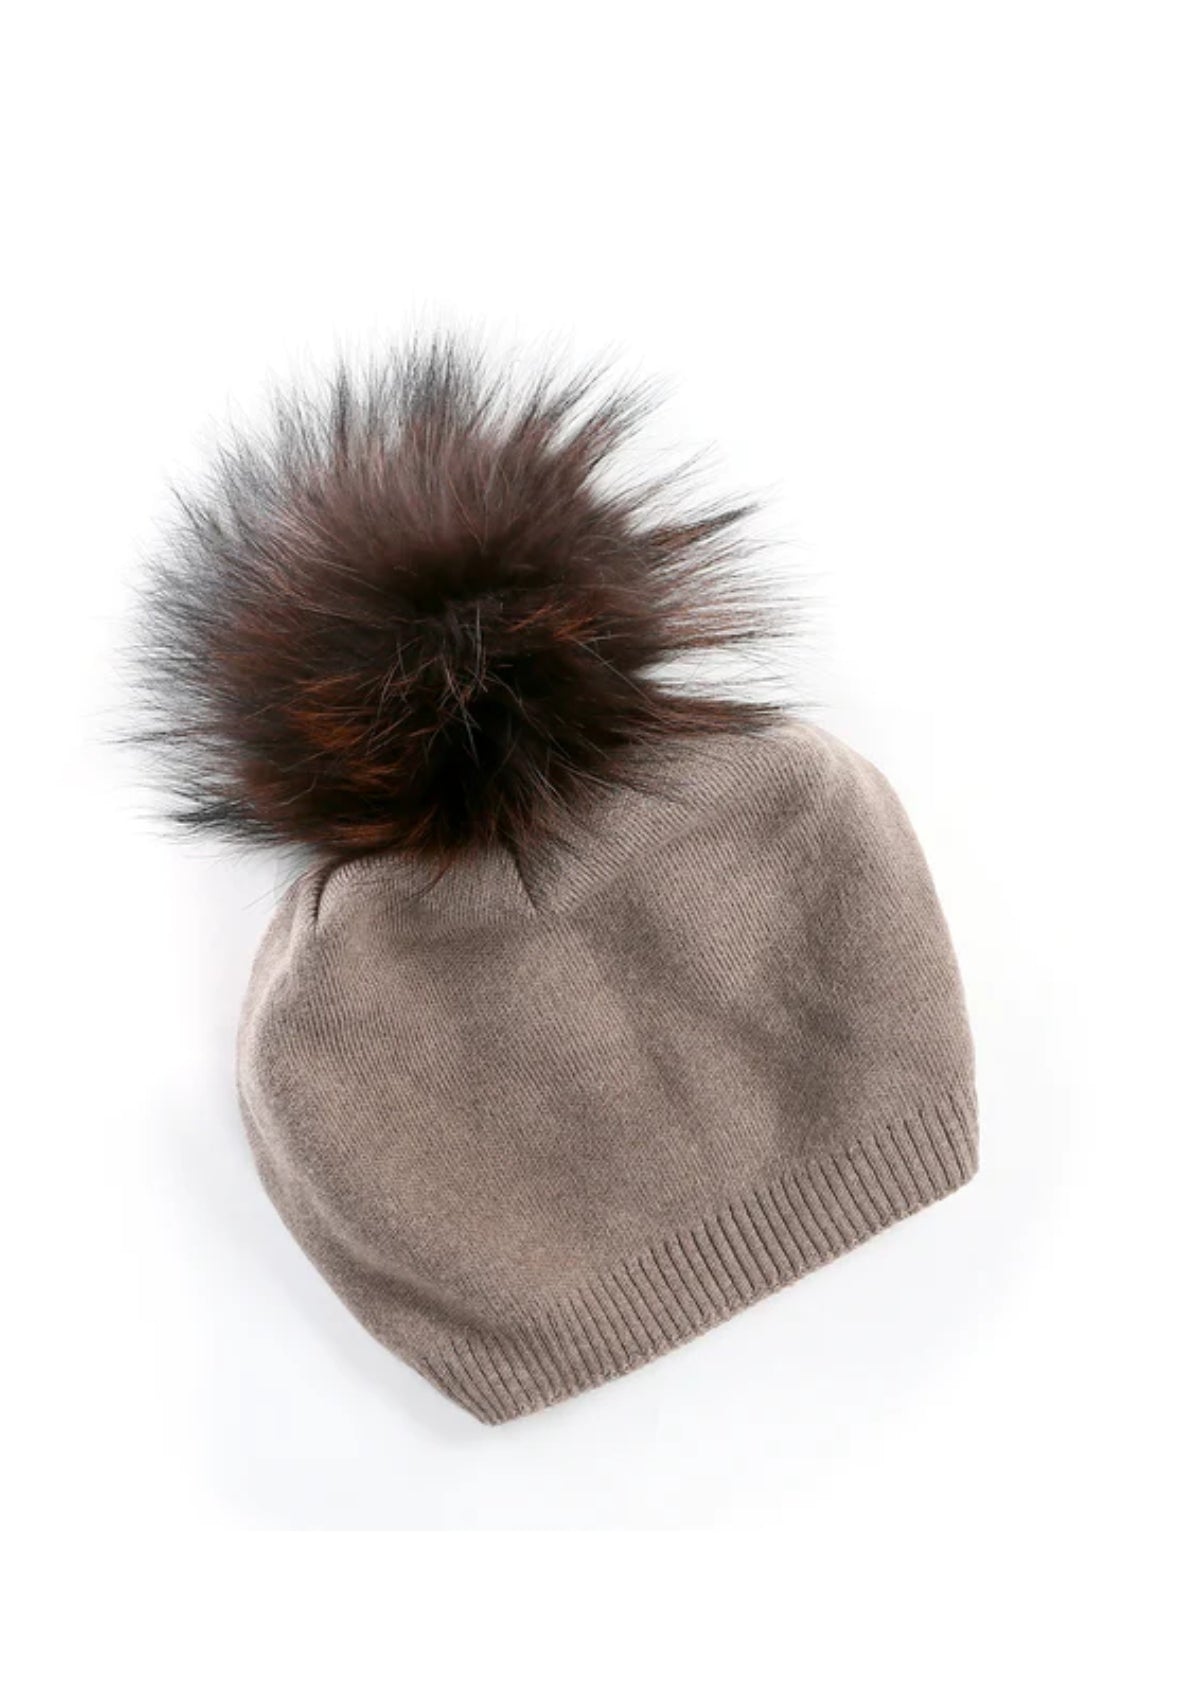 Real Fur Chestnut "The Fireside" Hat